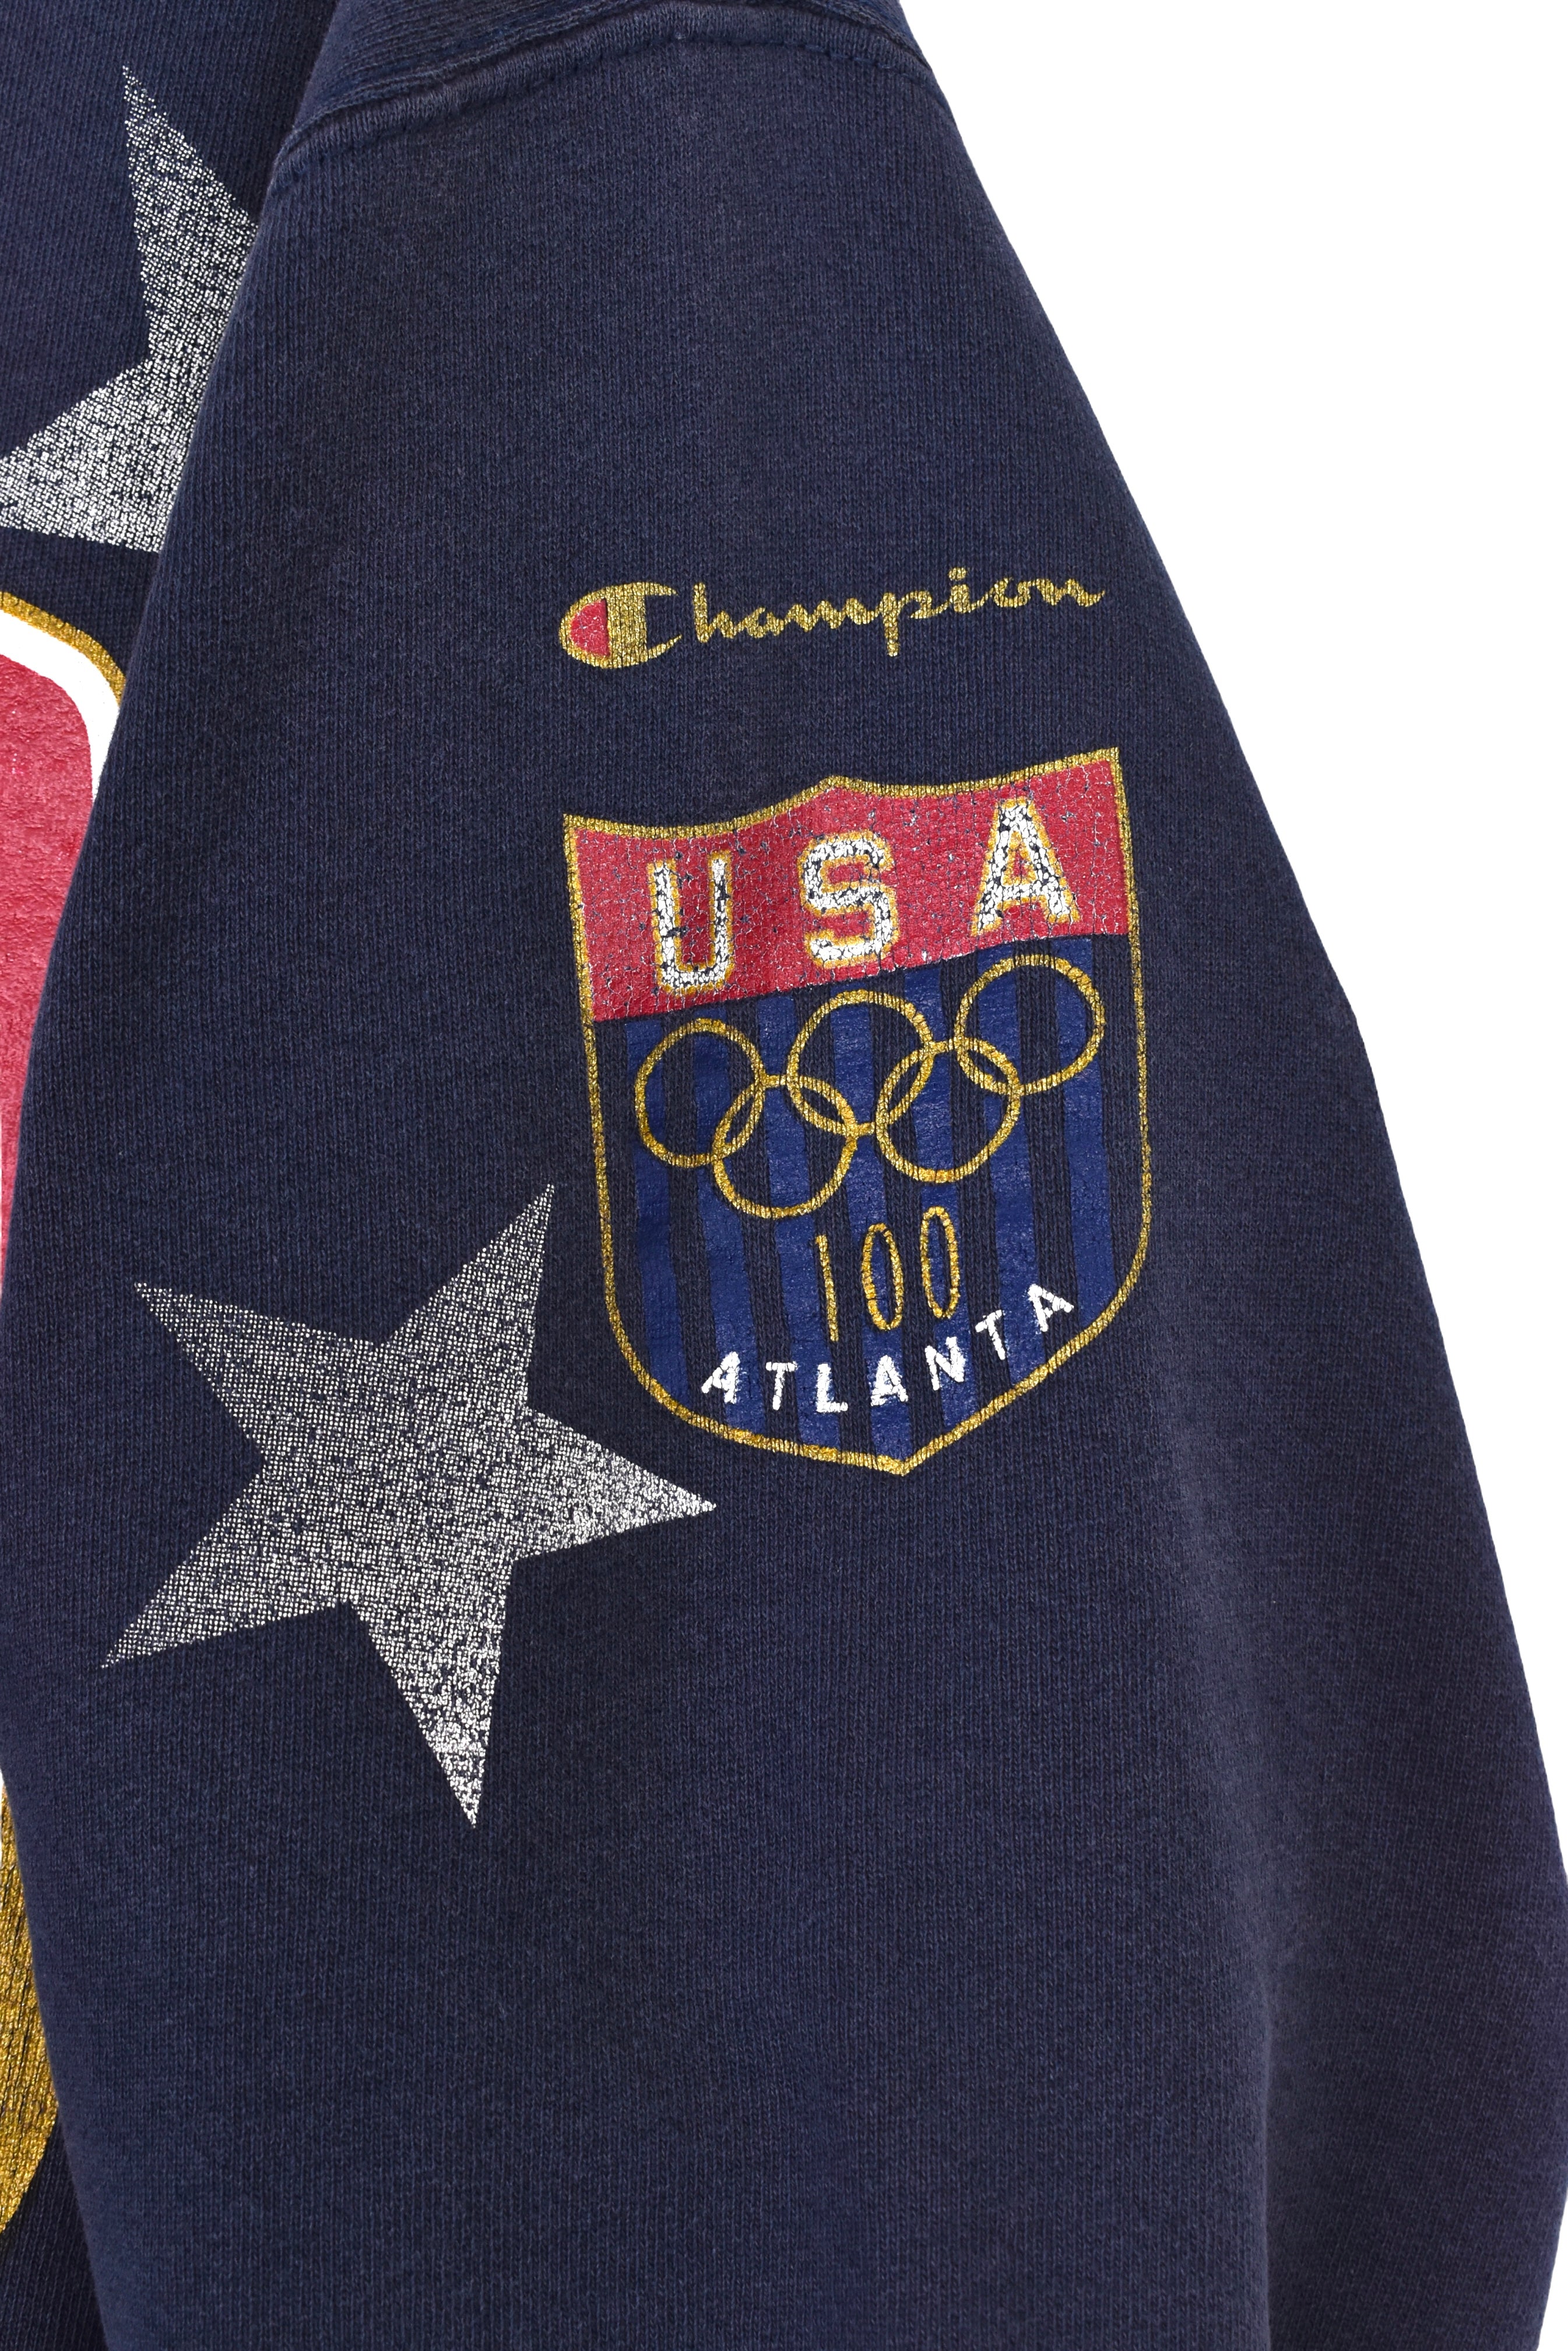 Vintage 1996 Atlanta Olympic sweatshirt, navy blue graphic crewneck - Large